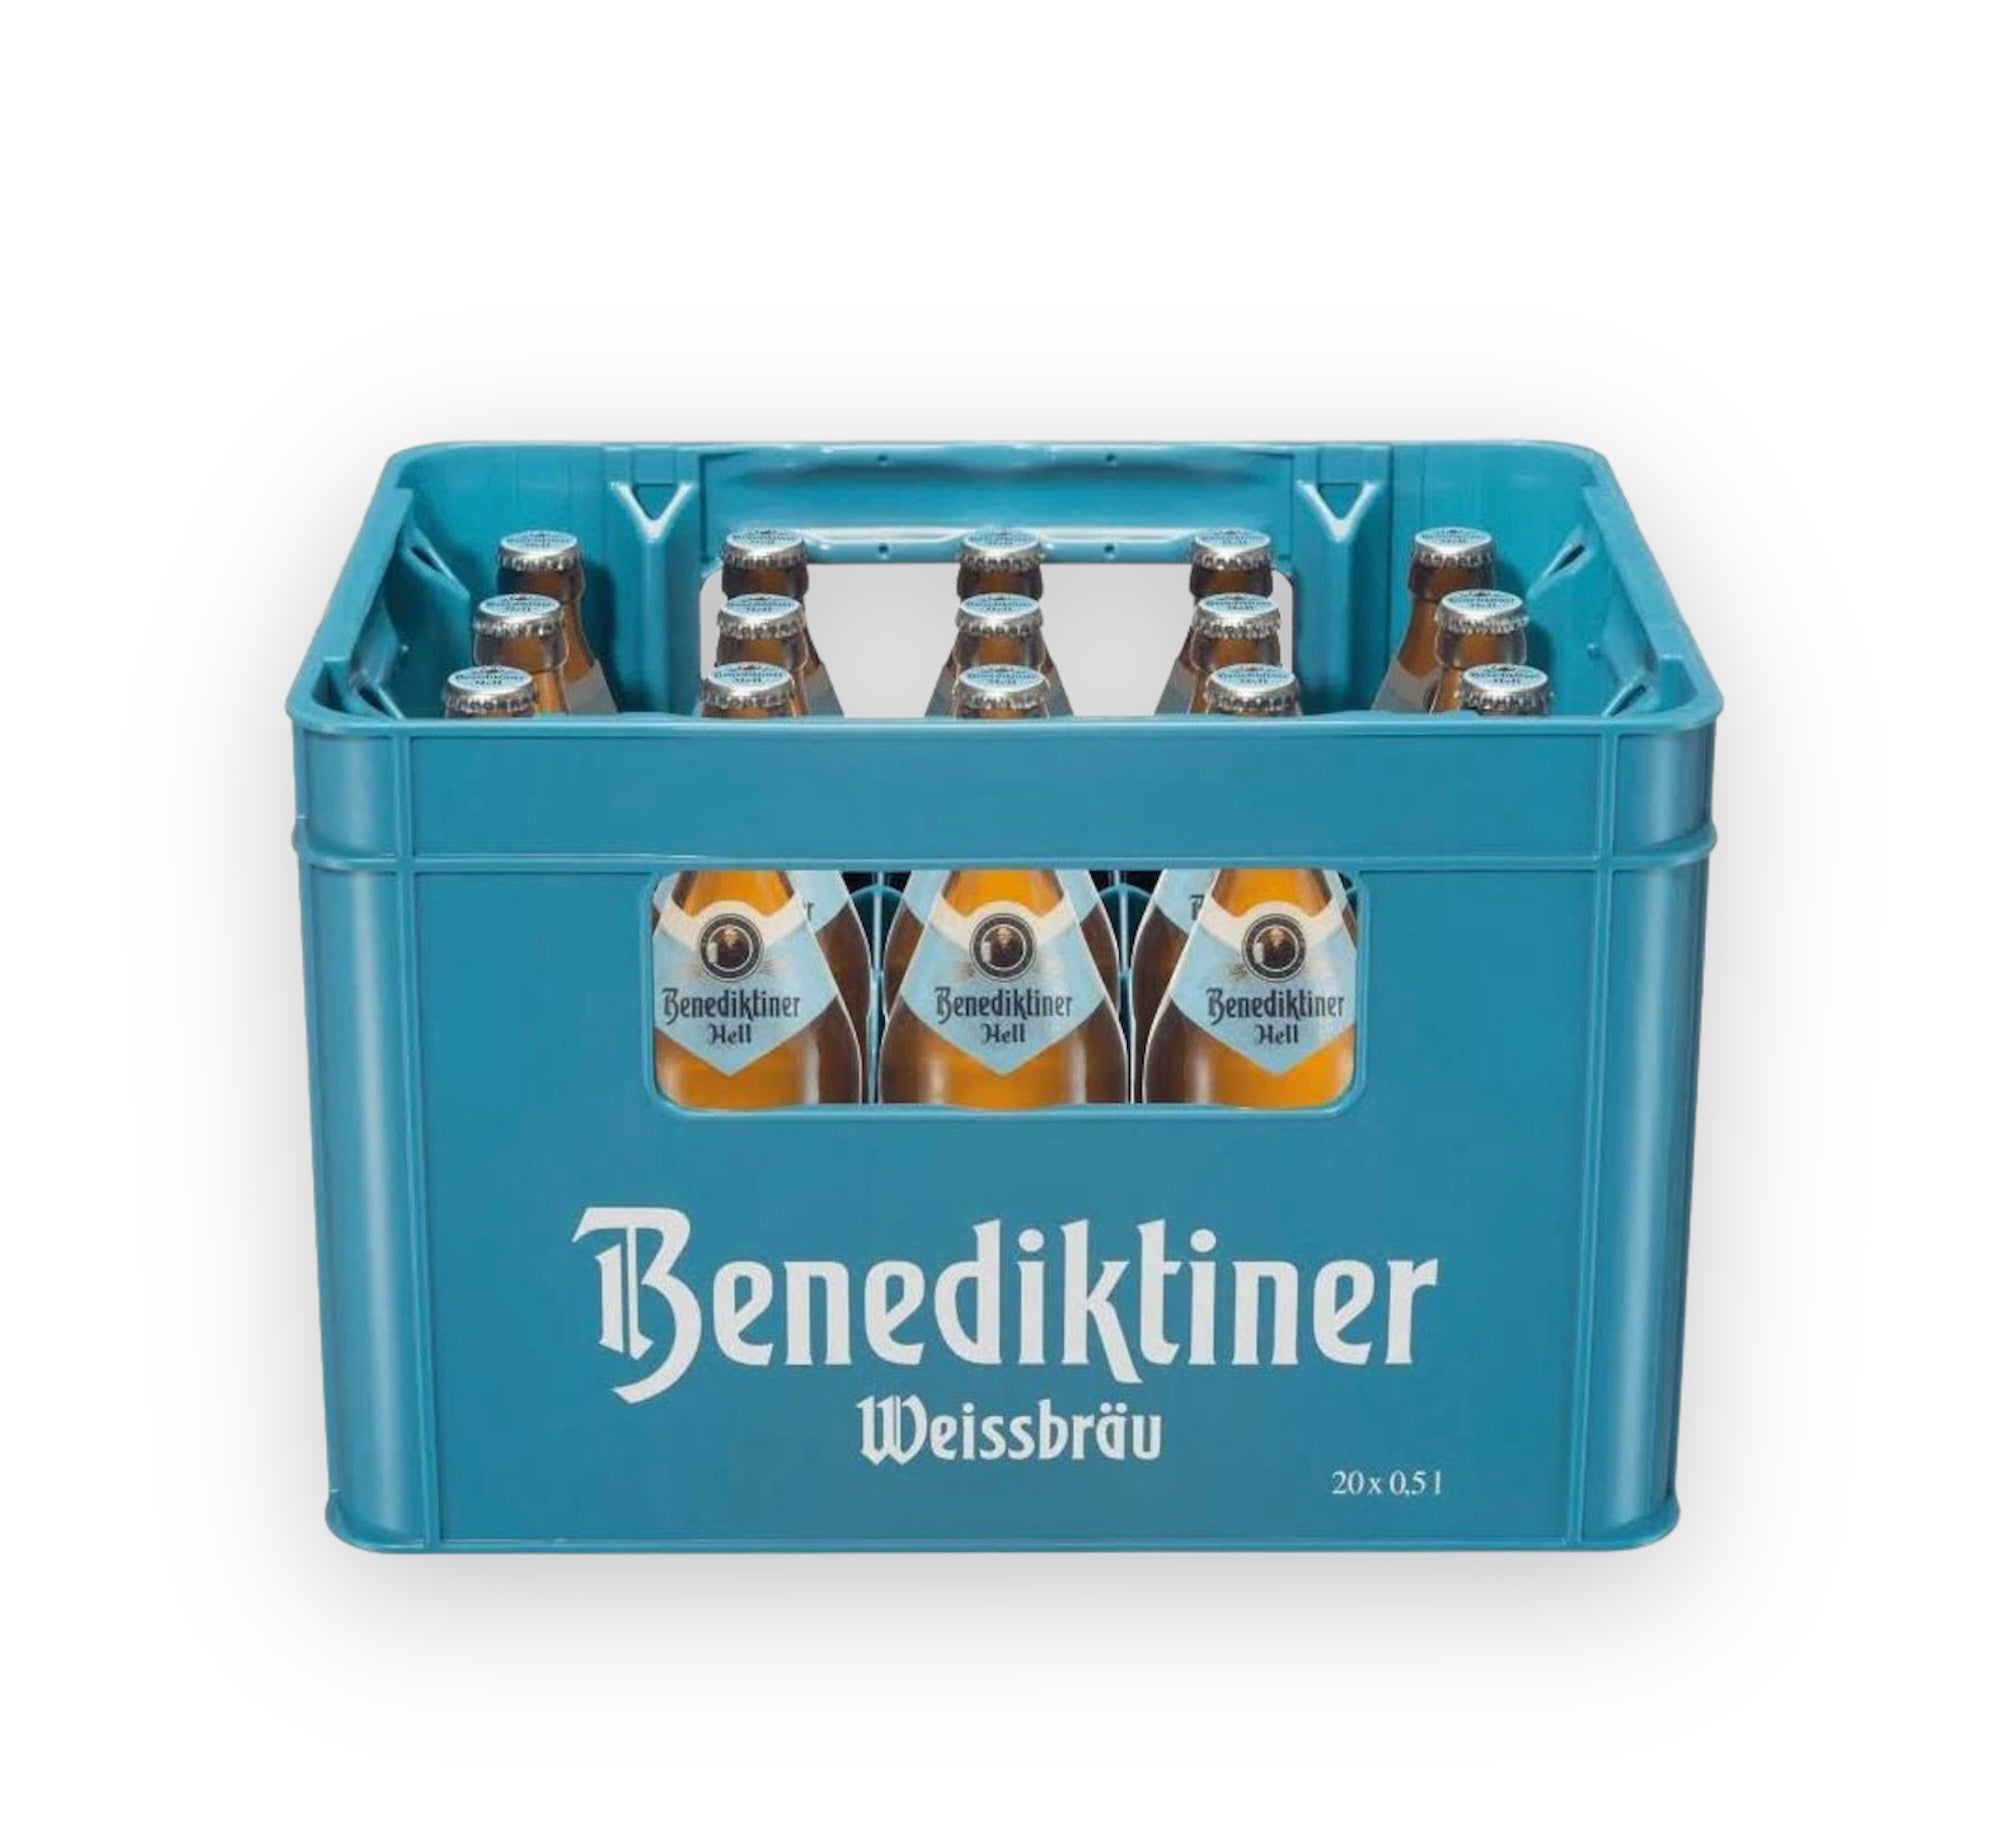 Benedictine Weissbräu beer 20 x 0.5l